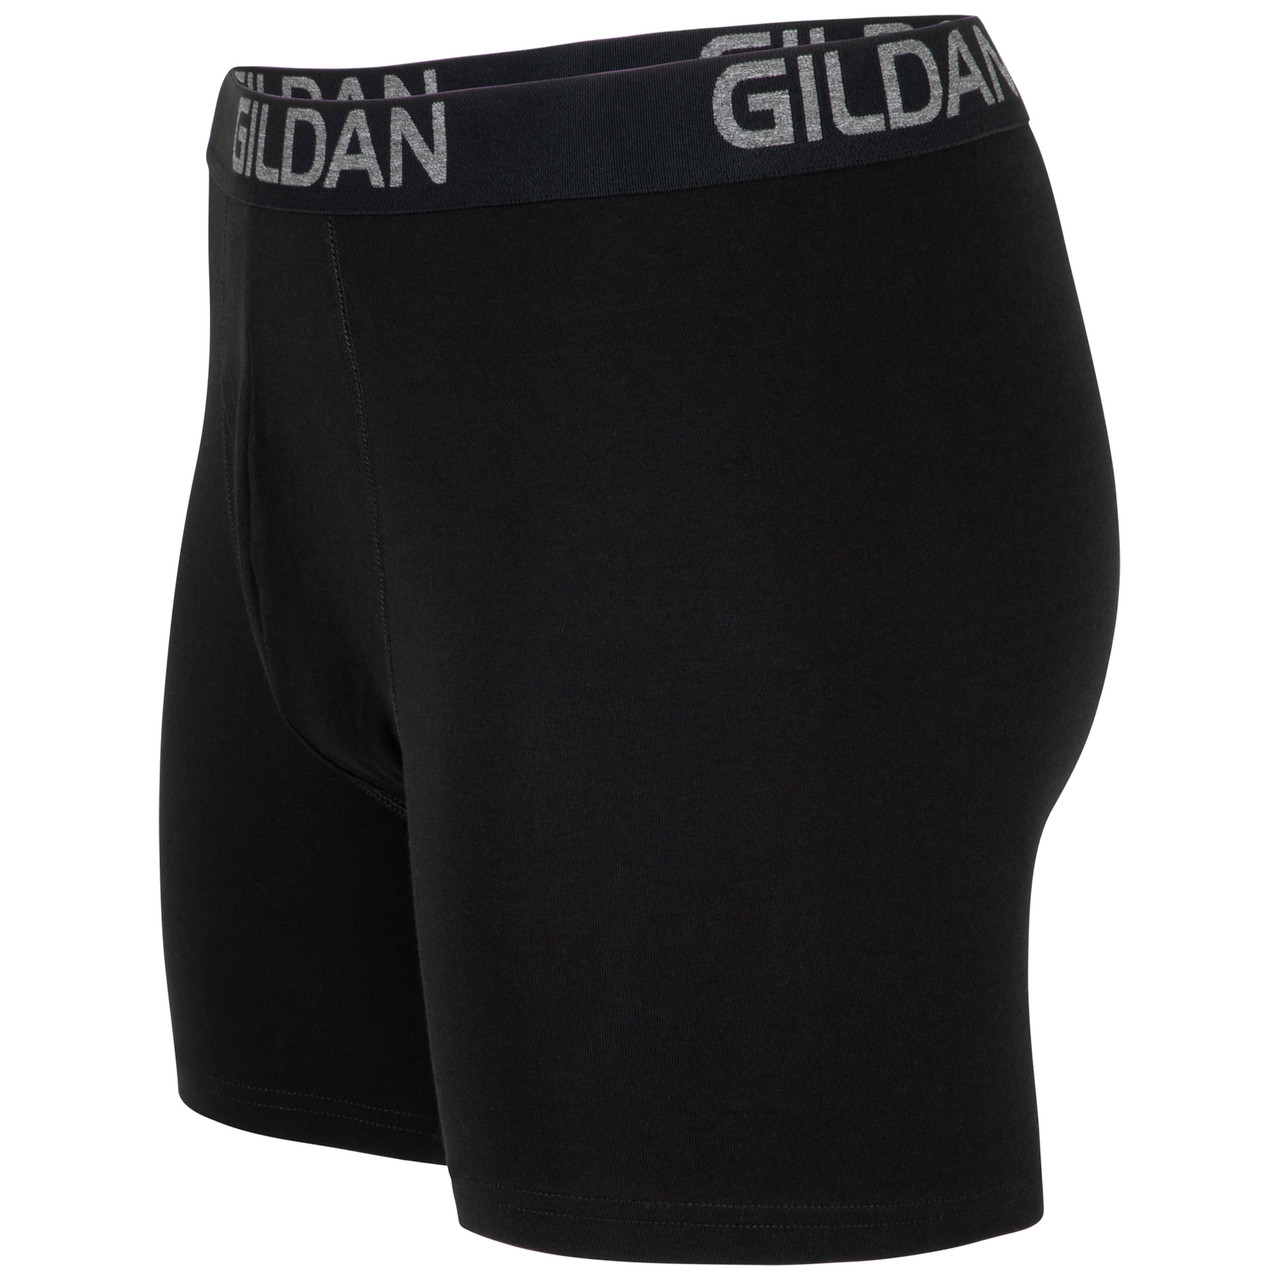 Gildan Adult Men's Performance Cotton Regular Leg Blue Boxer